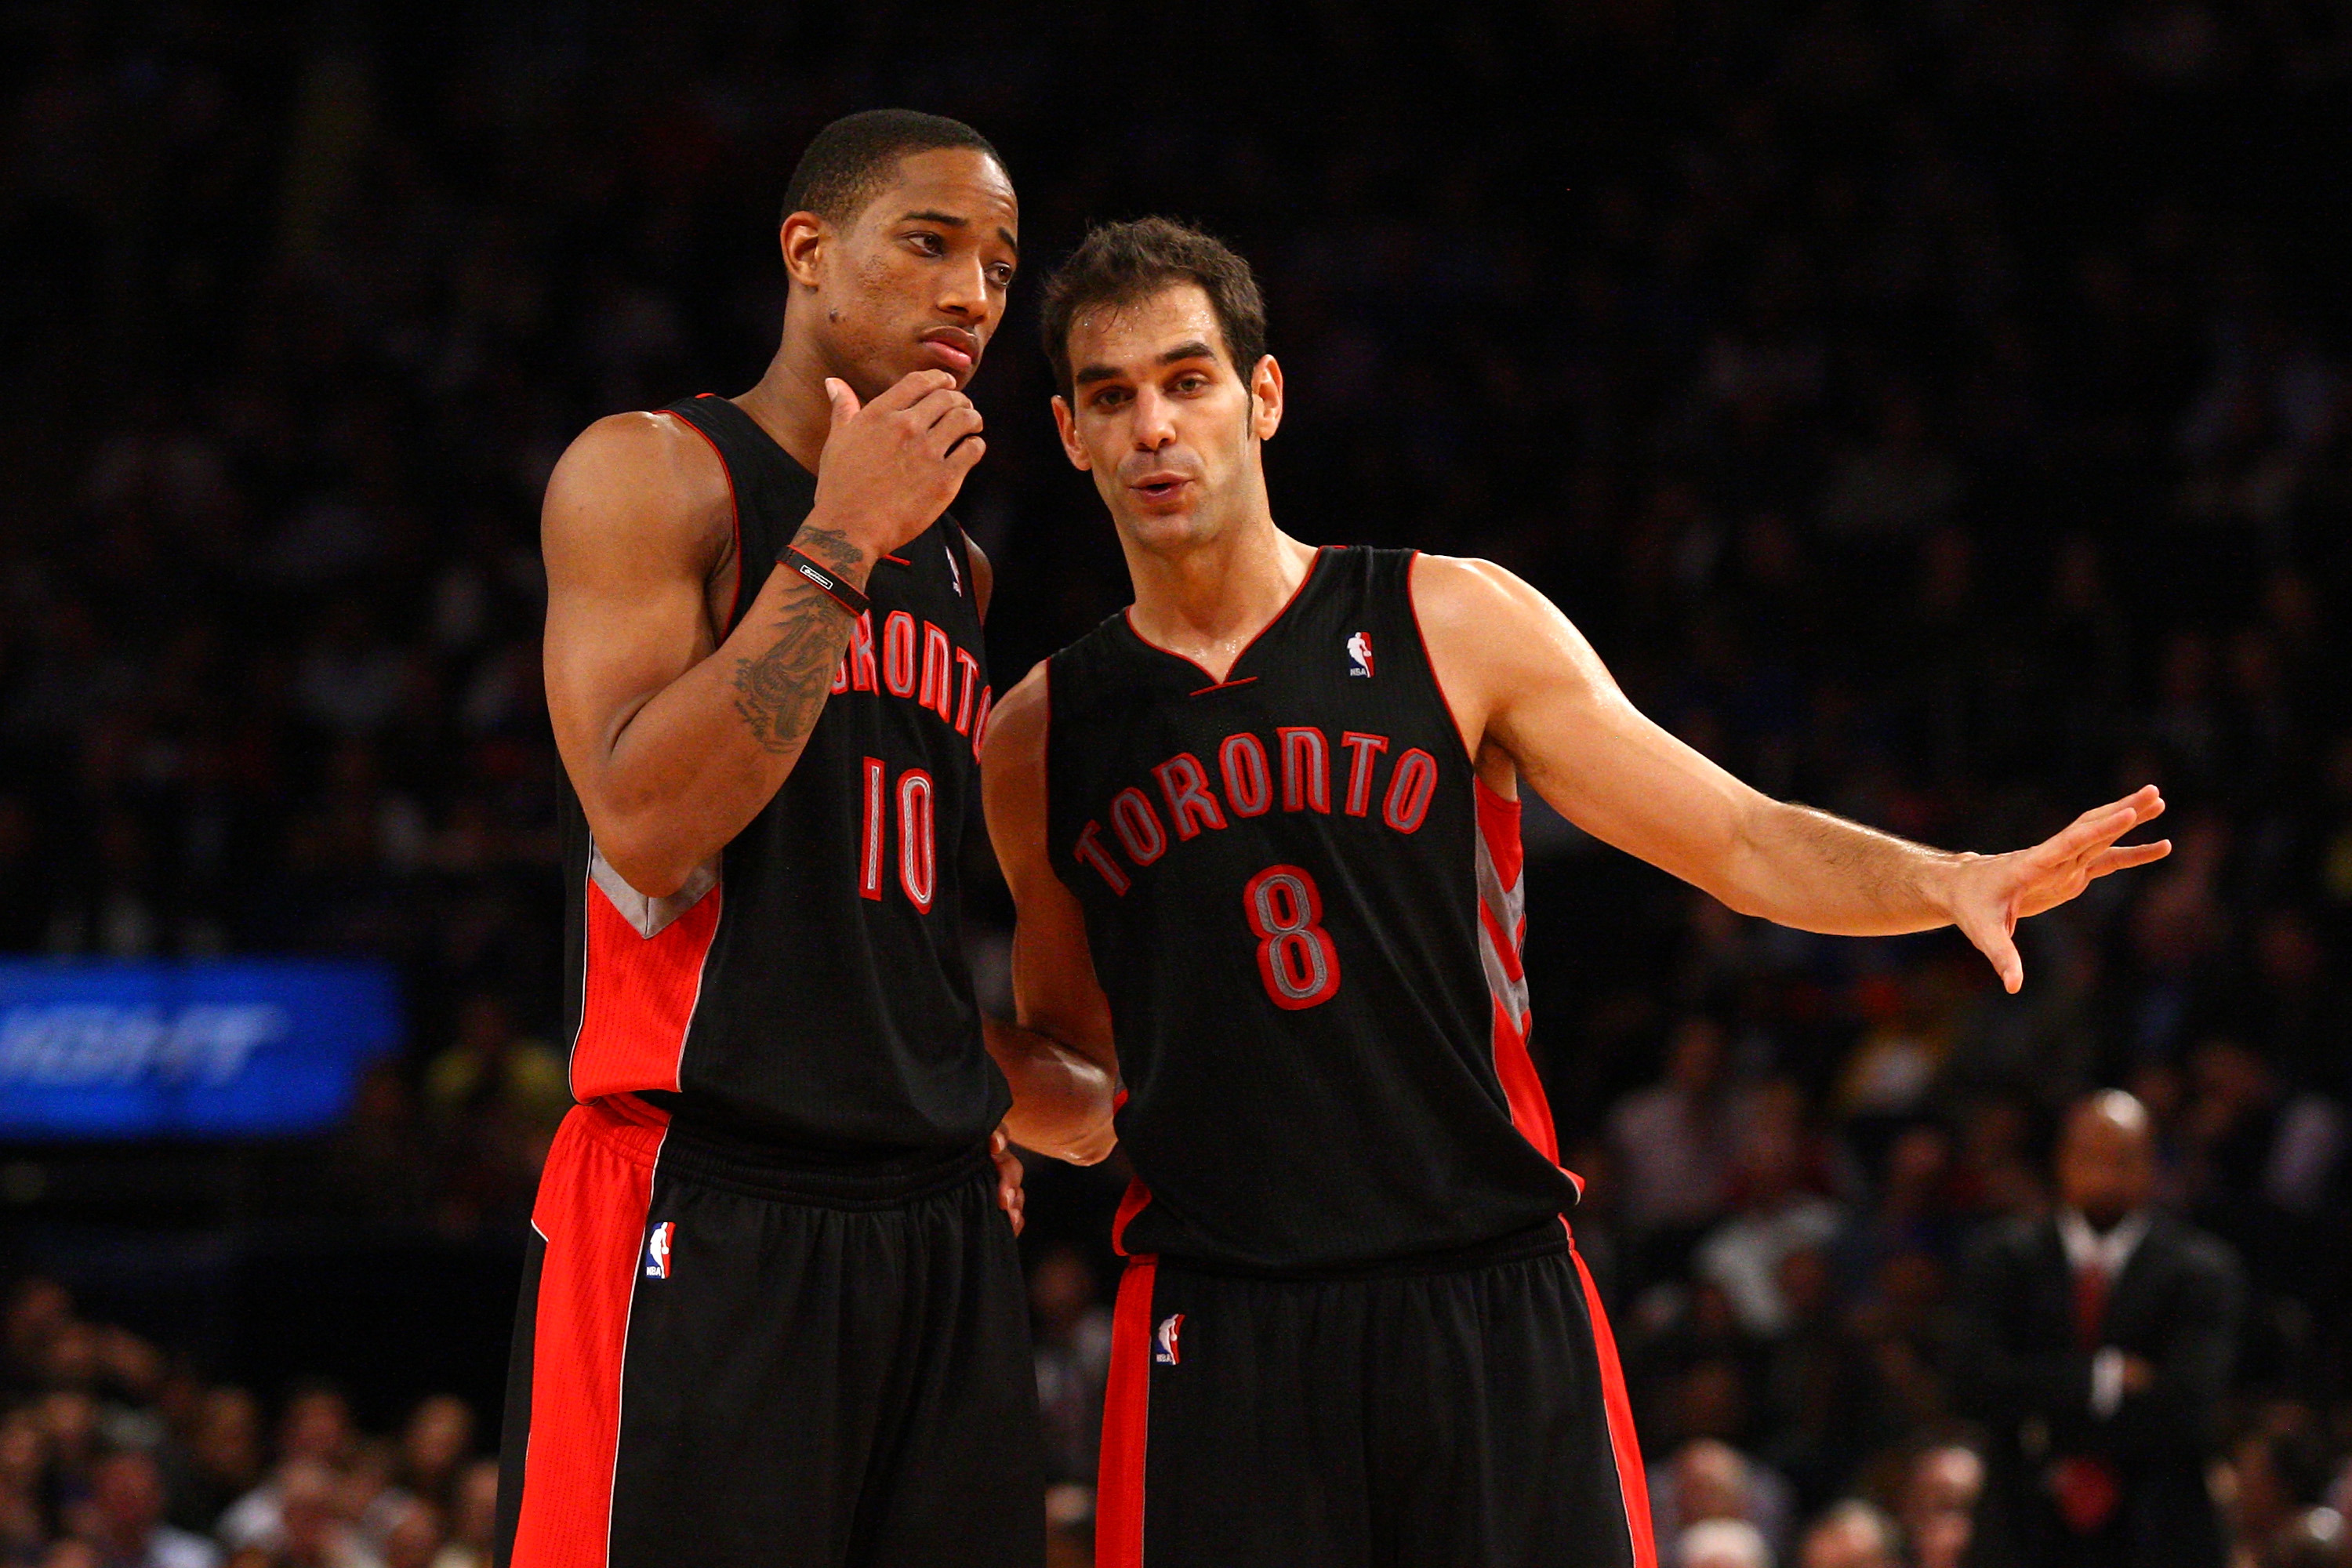 Report: Toronto Raptors ranked 10th in NBA merchandise sales - Raptors HQ